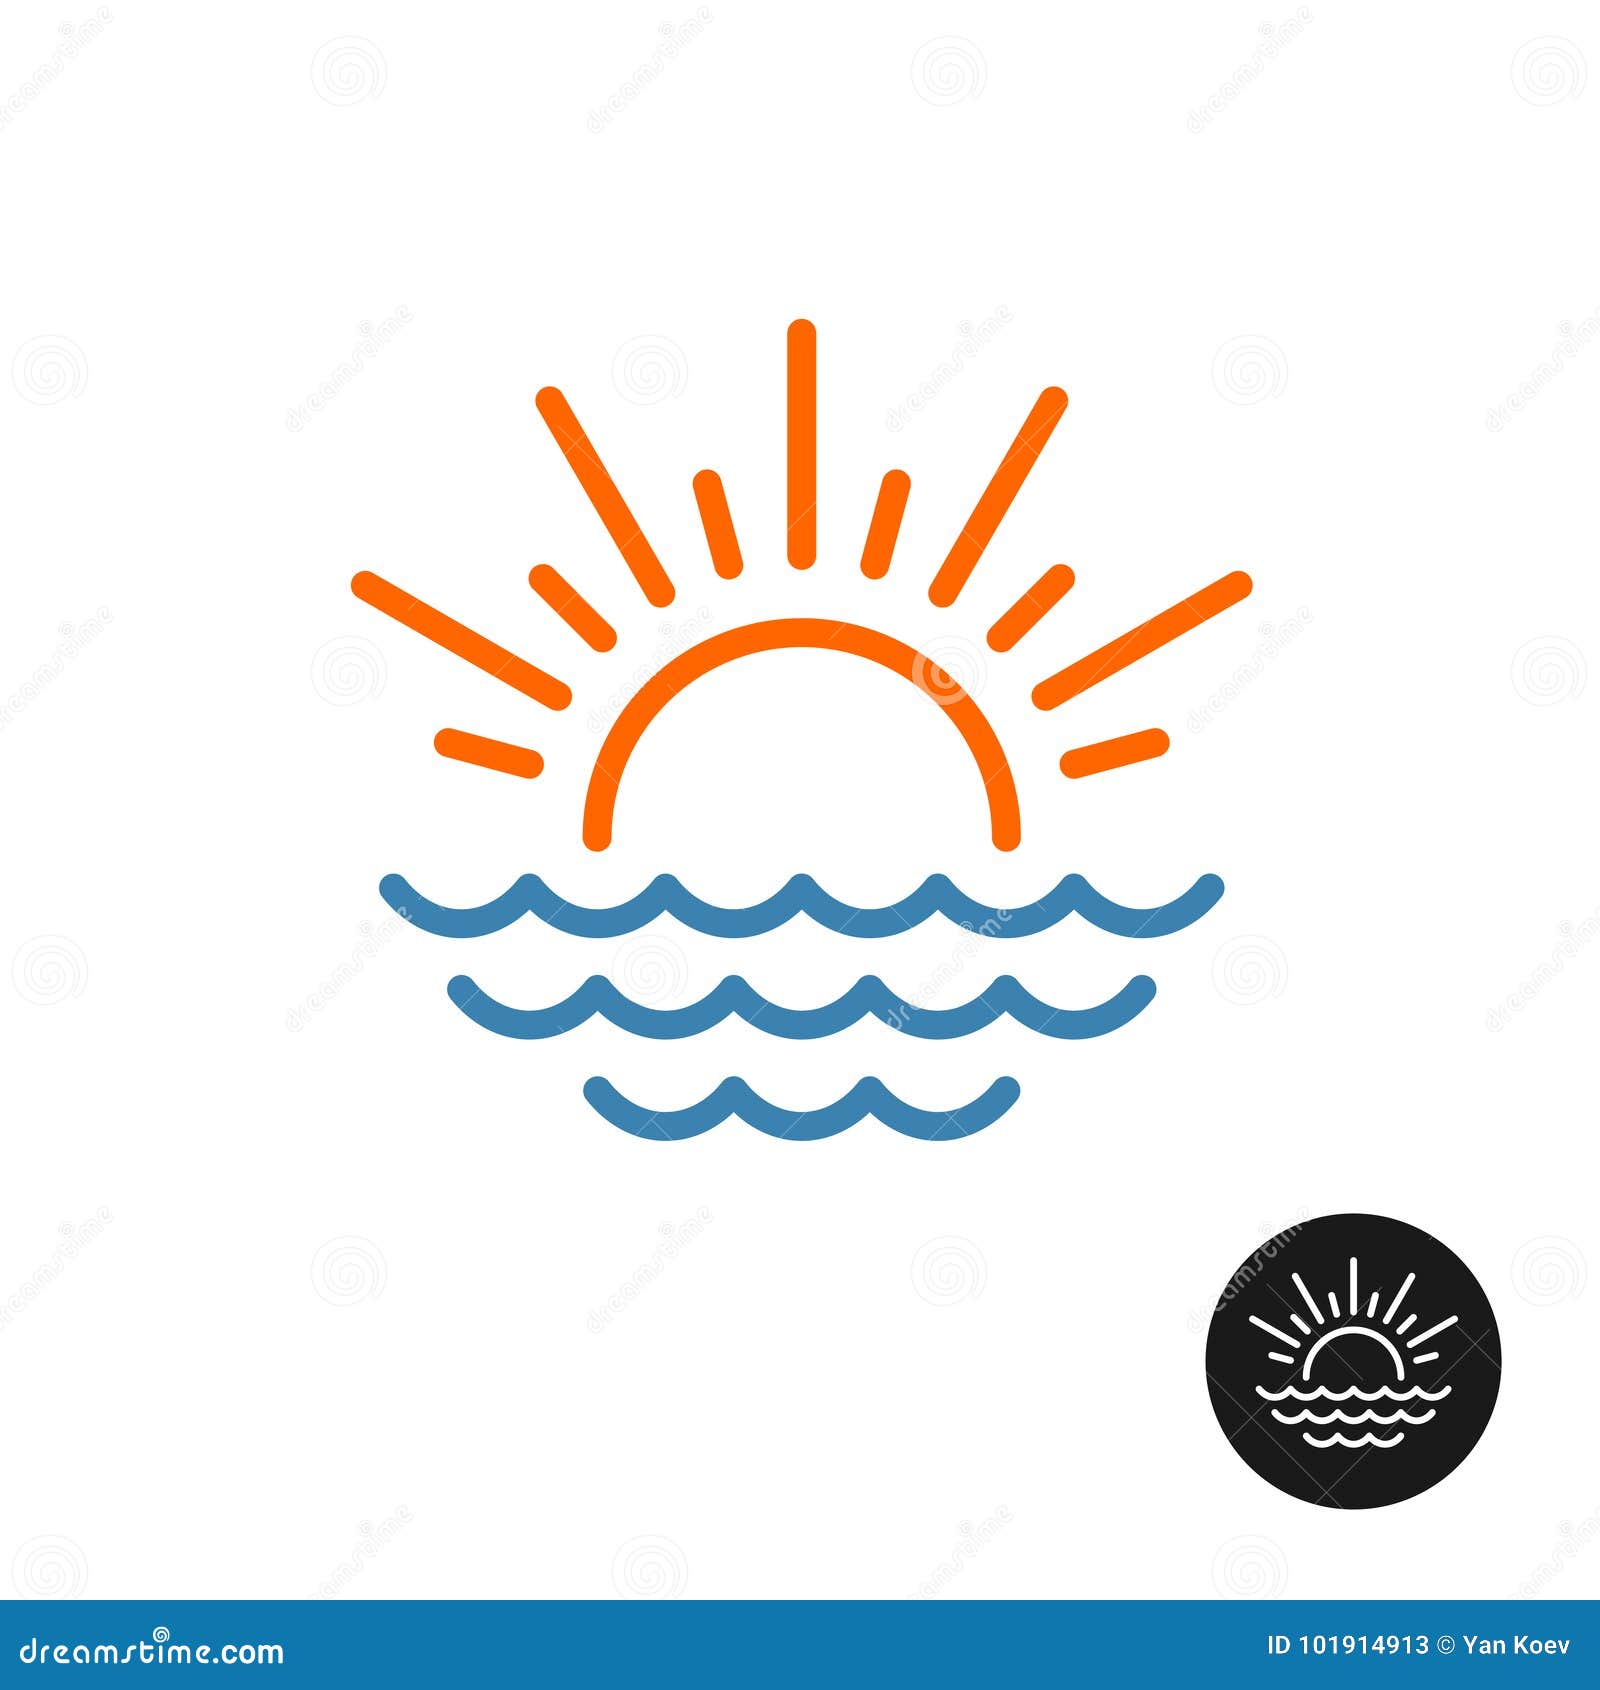 sun rays and sea waves logo.